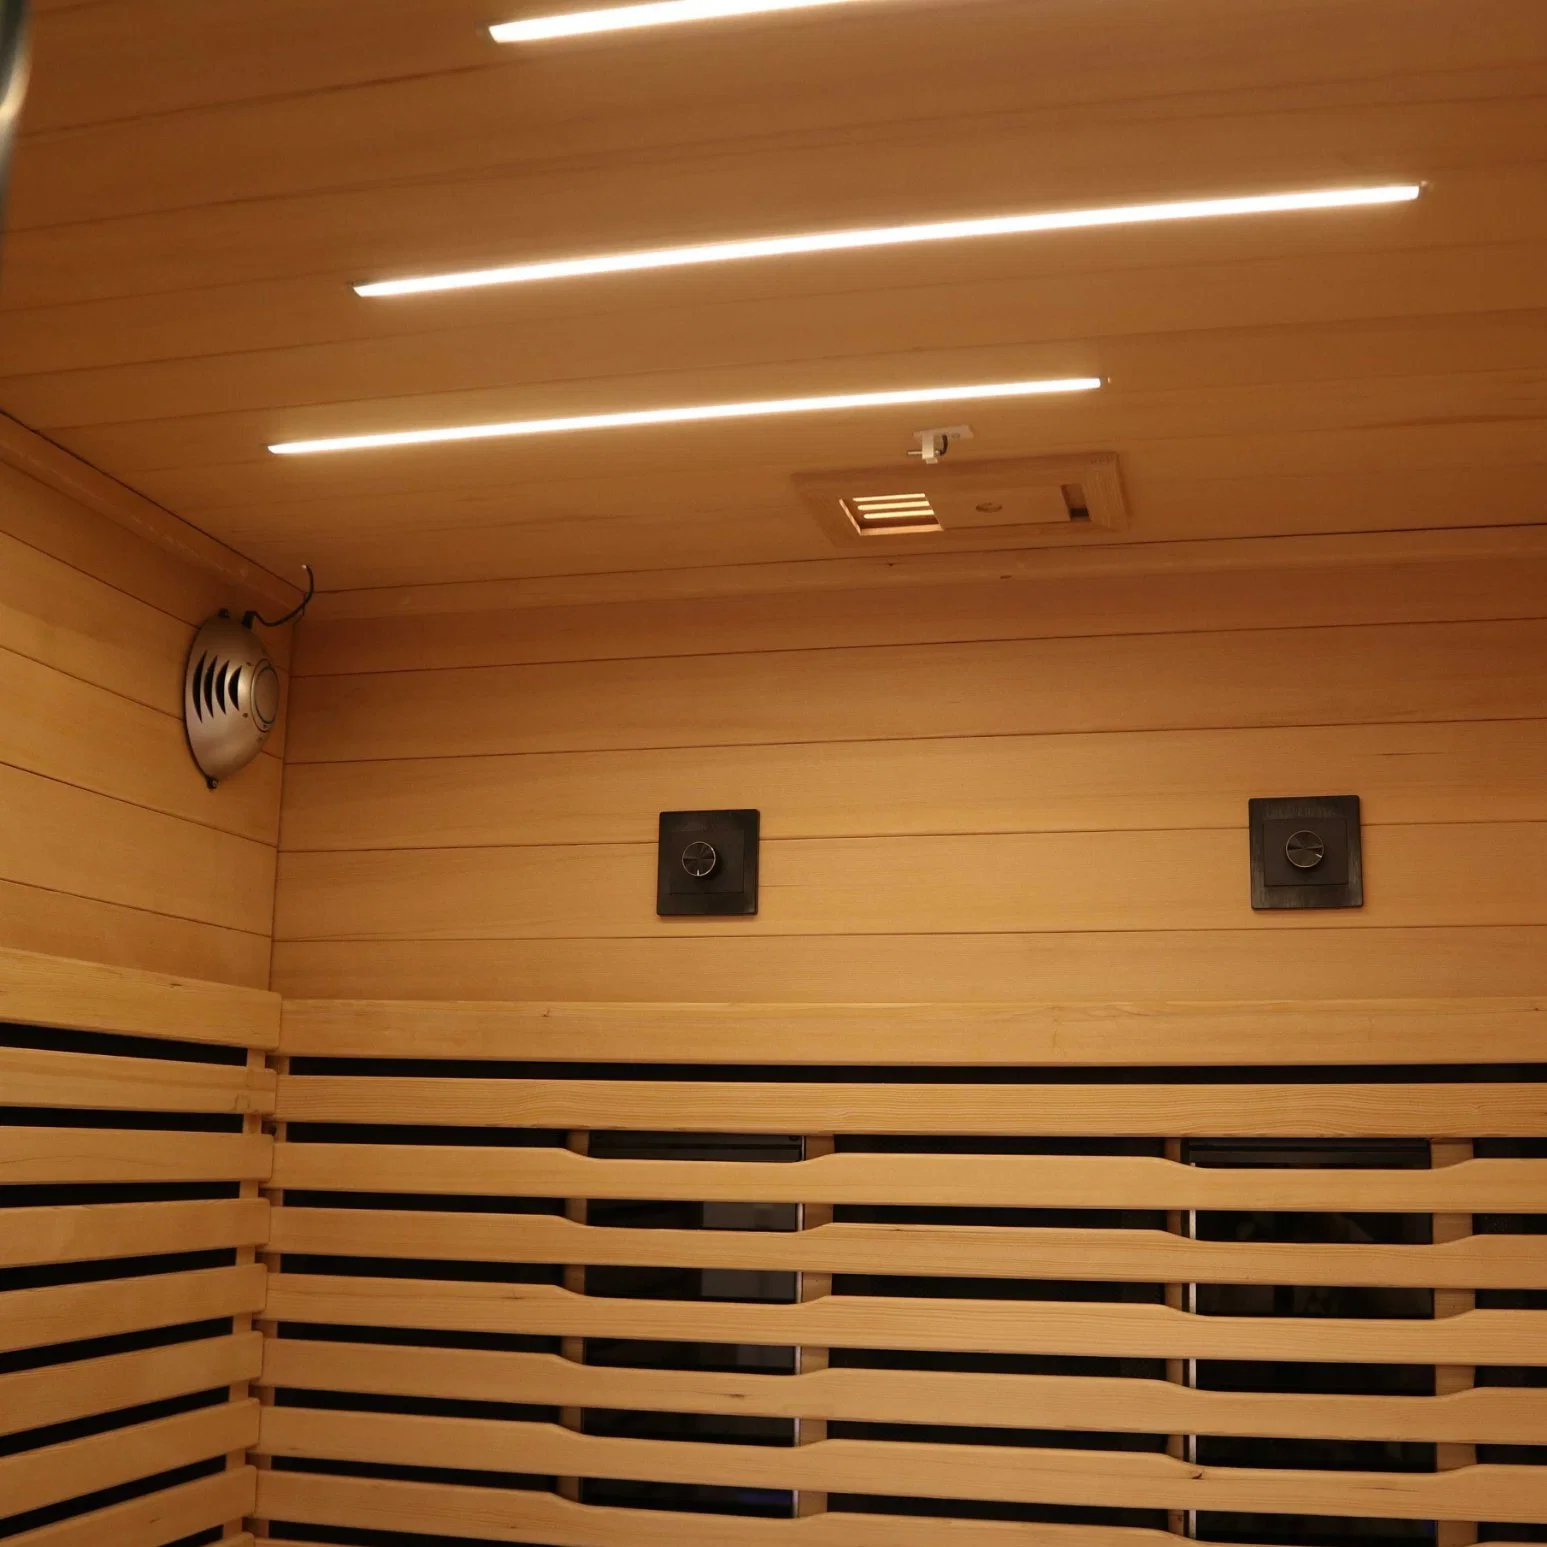 V Health Hemlock Sauna Rooms Dry Steam Infrared Sauna Room